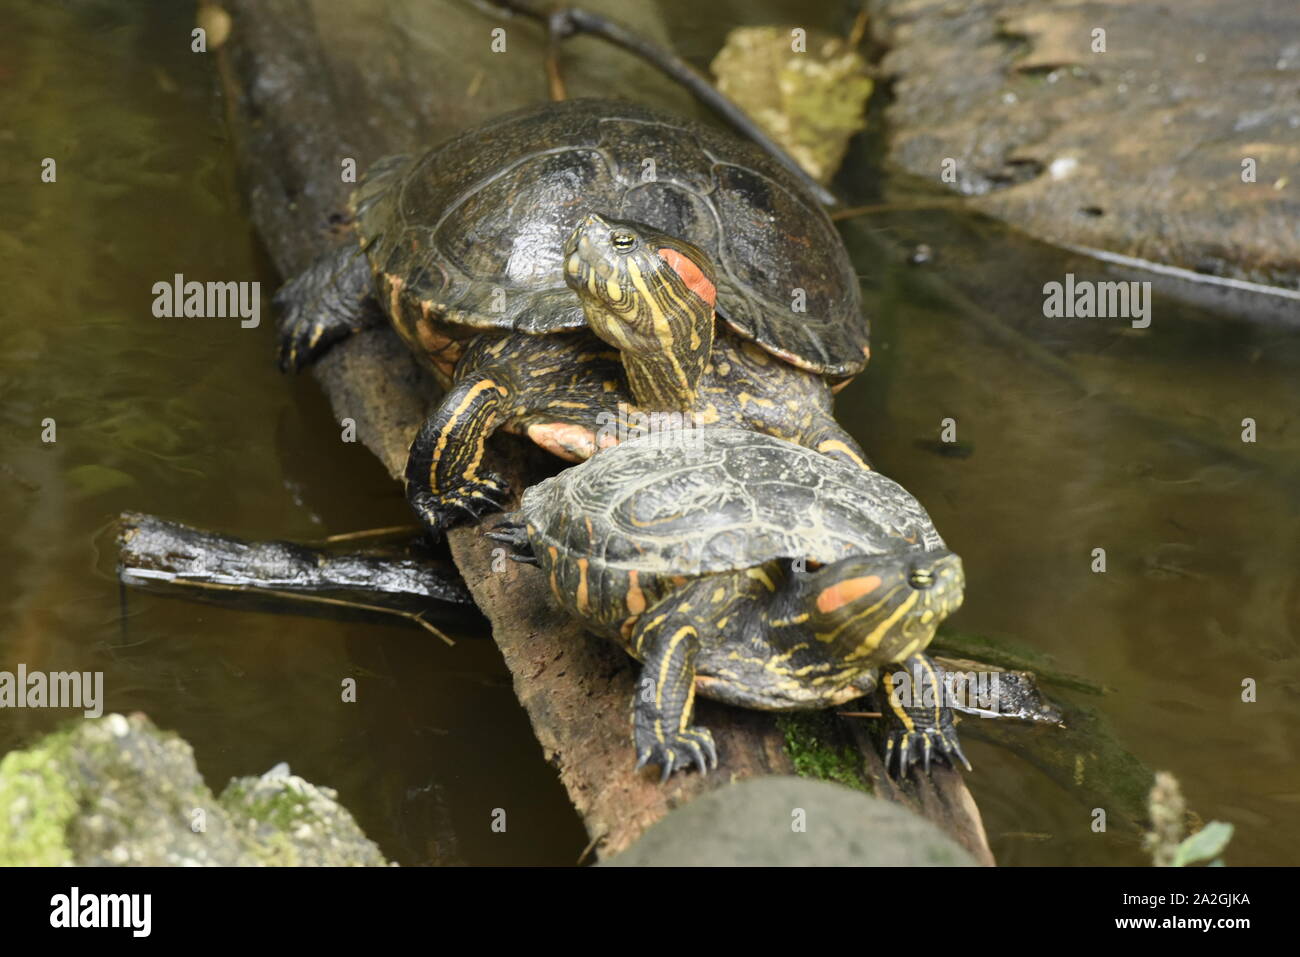 Red-eared slider turtles (Trachemys scripta), Zamora, Ecuador Stock Photo